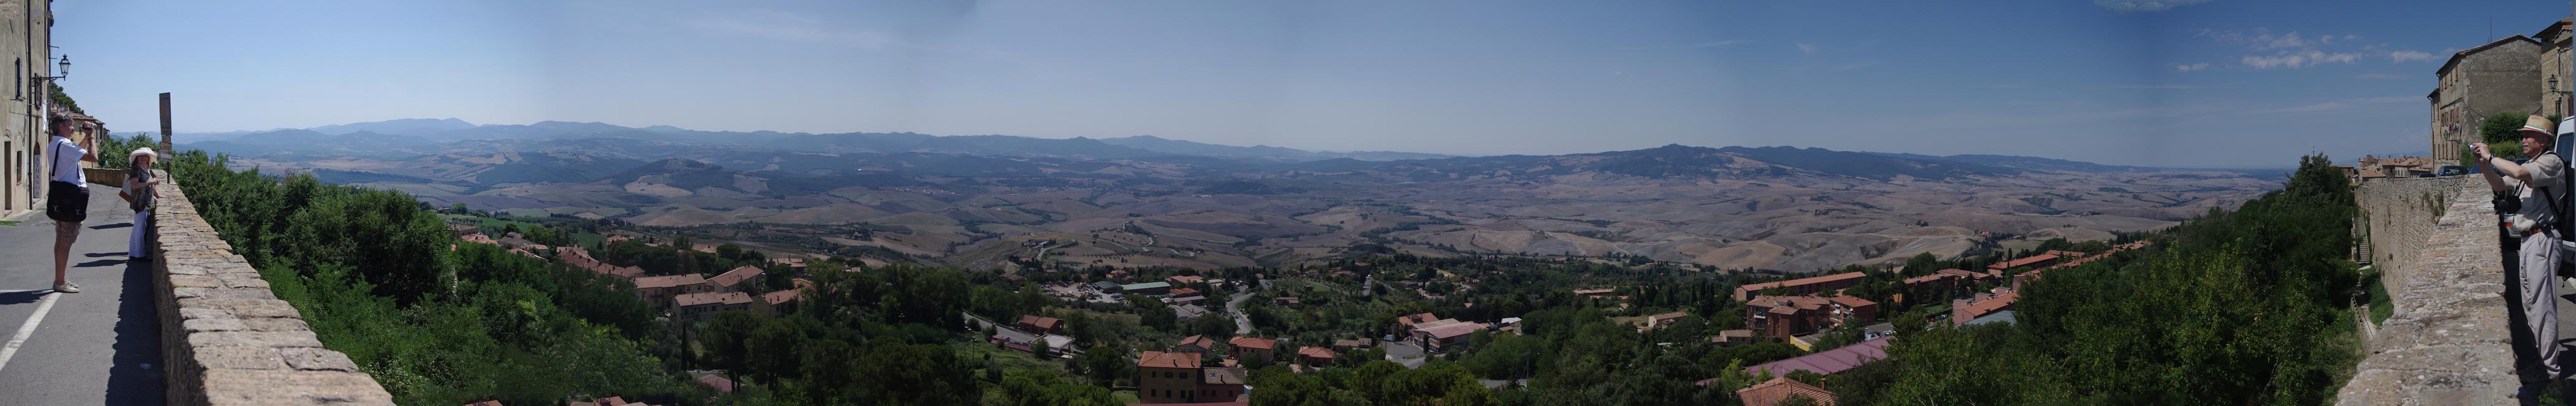 toscana2013-Volterra-Siena-IMGP4044c-48_50-pan-sm